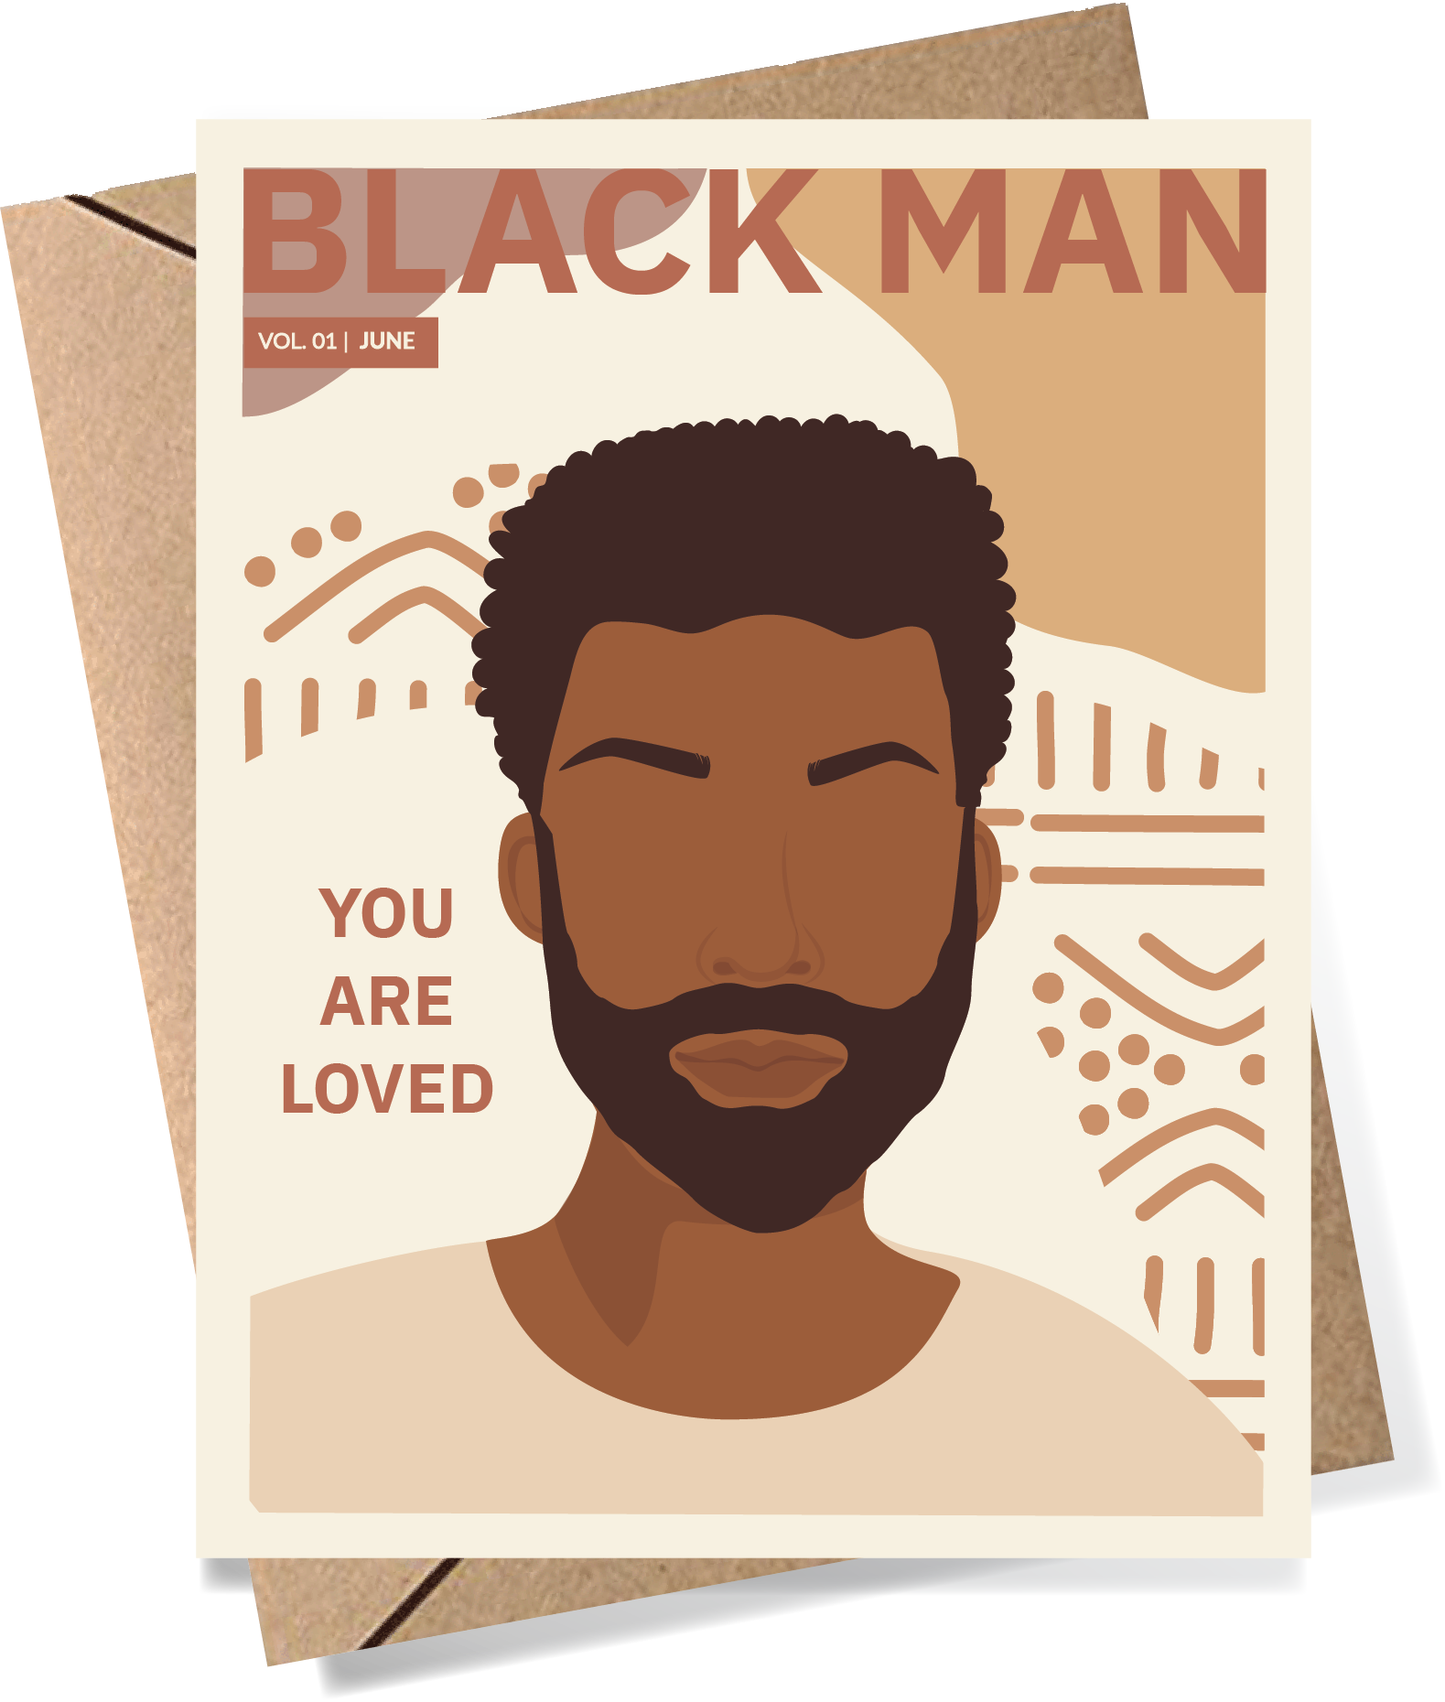 Black Man, I Love You.